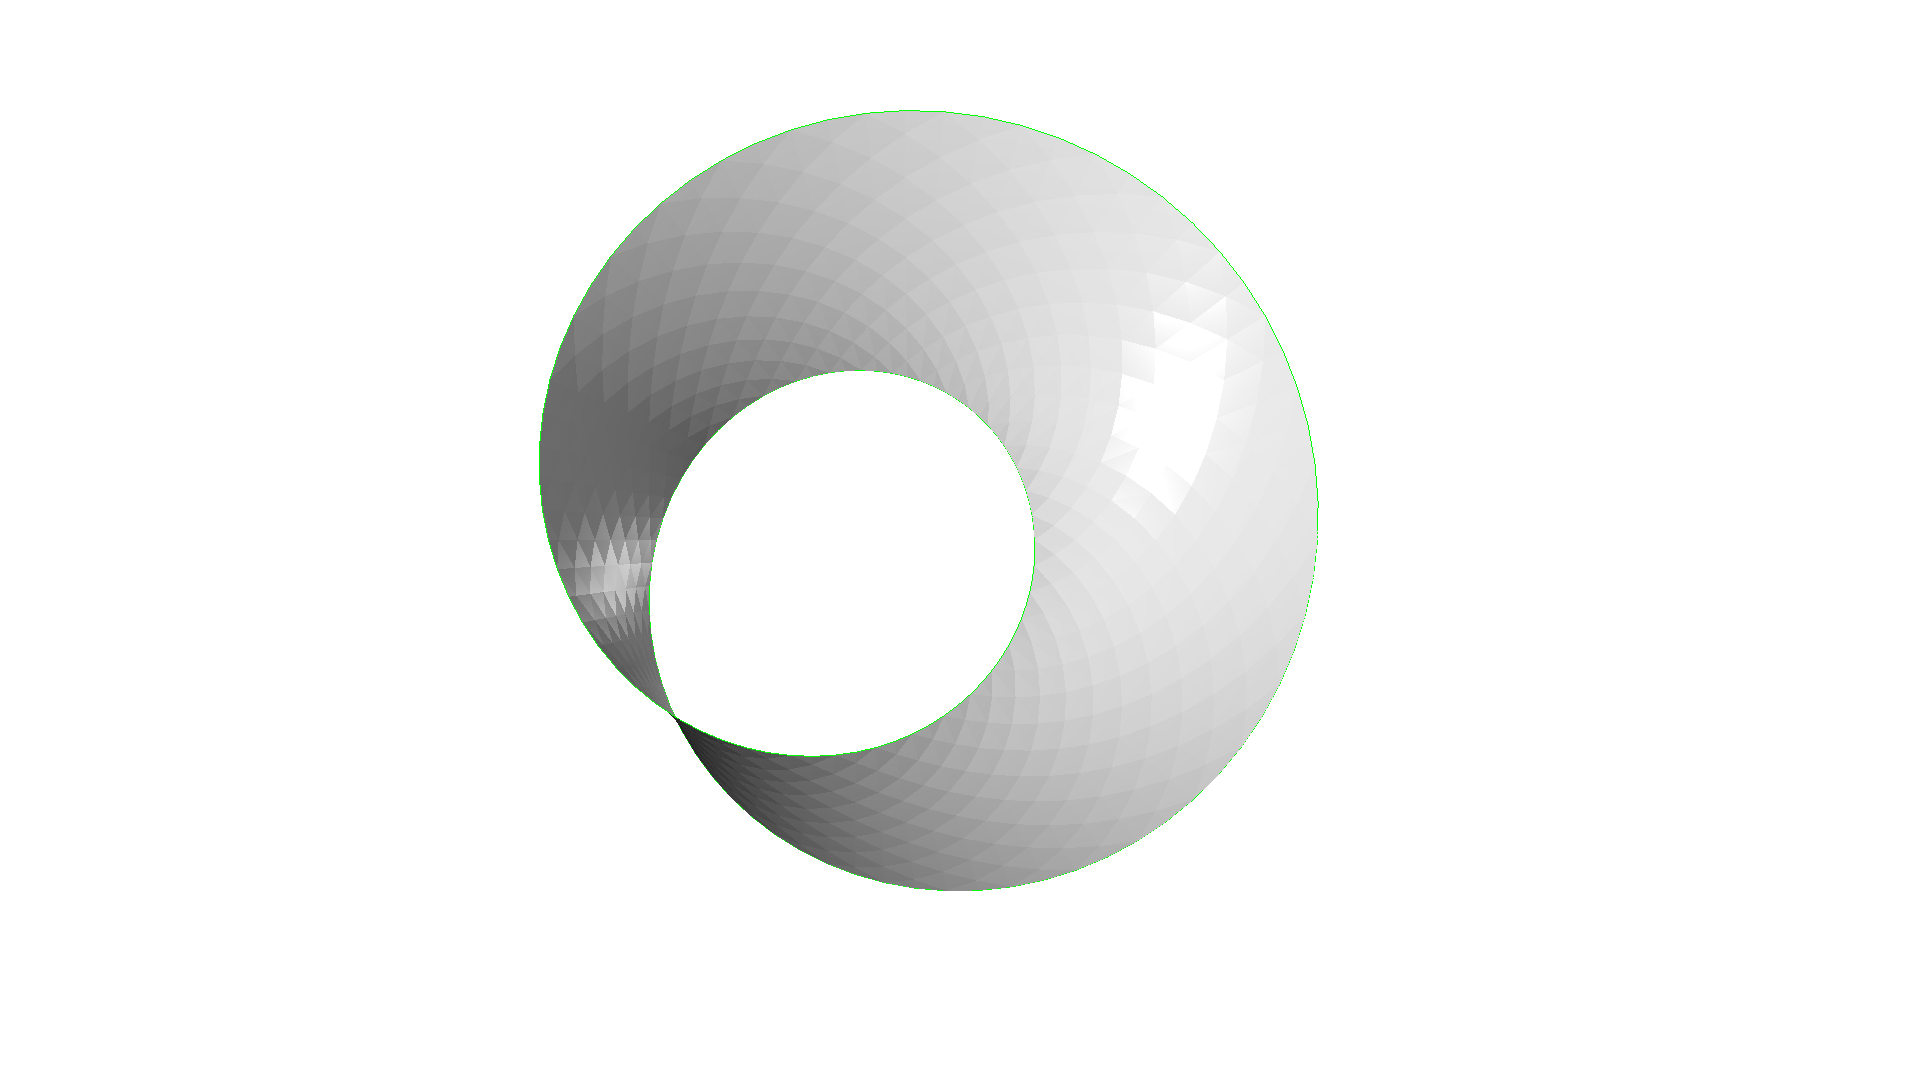 ../../_images/tutorial_geometry_mesh_16_3.png